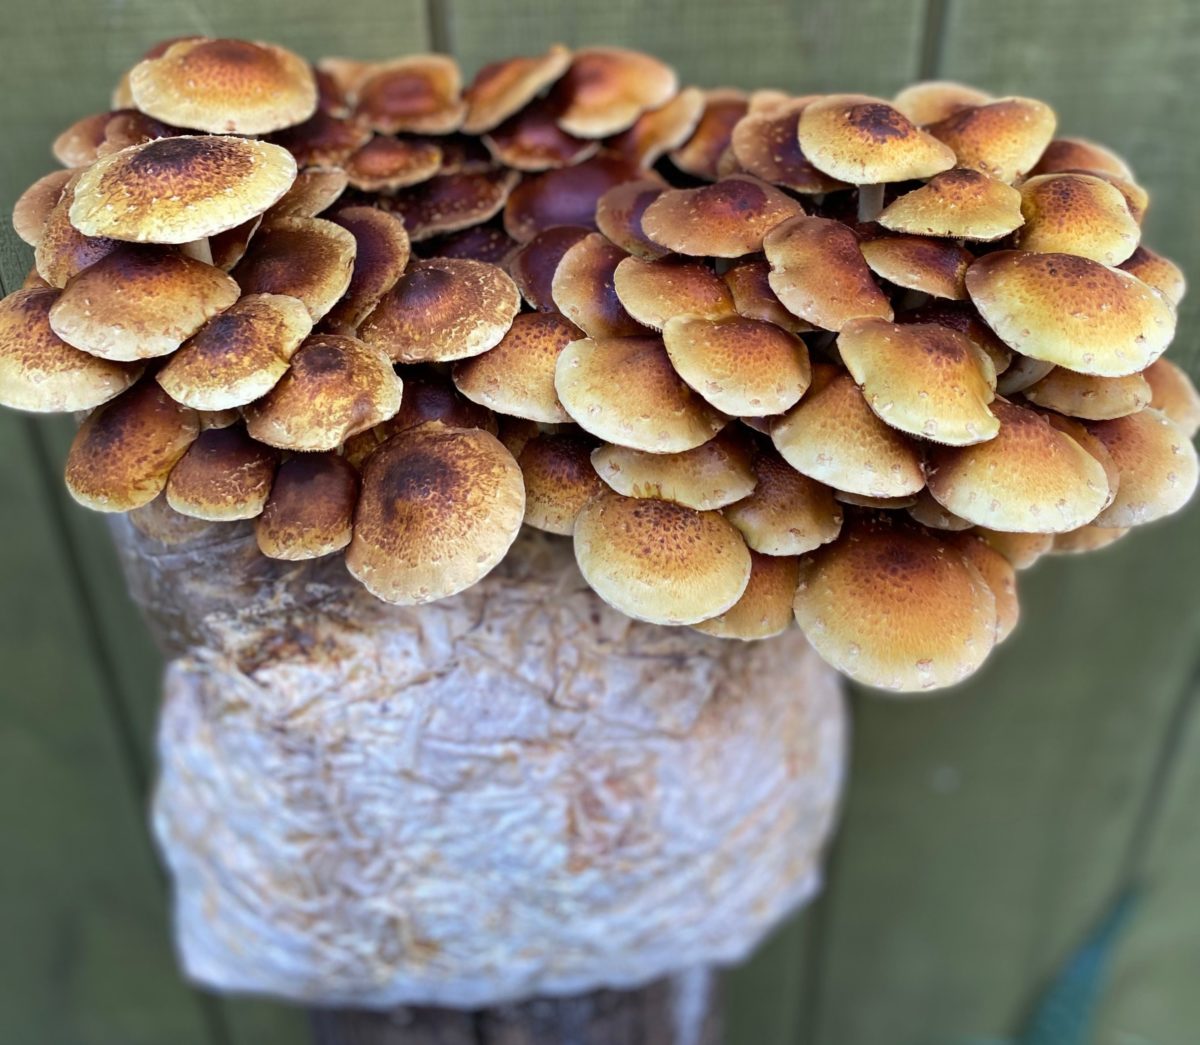 Seaside's Paradise Mushrooms Offers Fresh Fungi at the Farmers Market